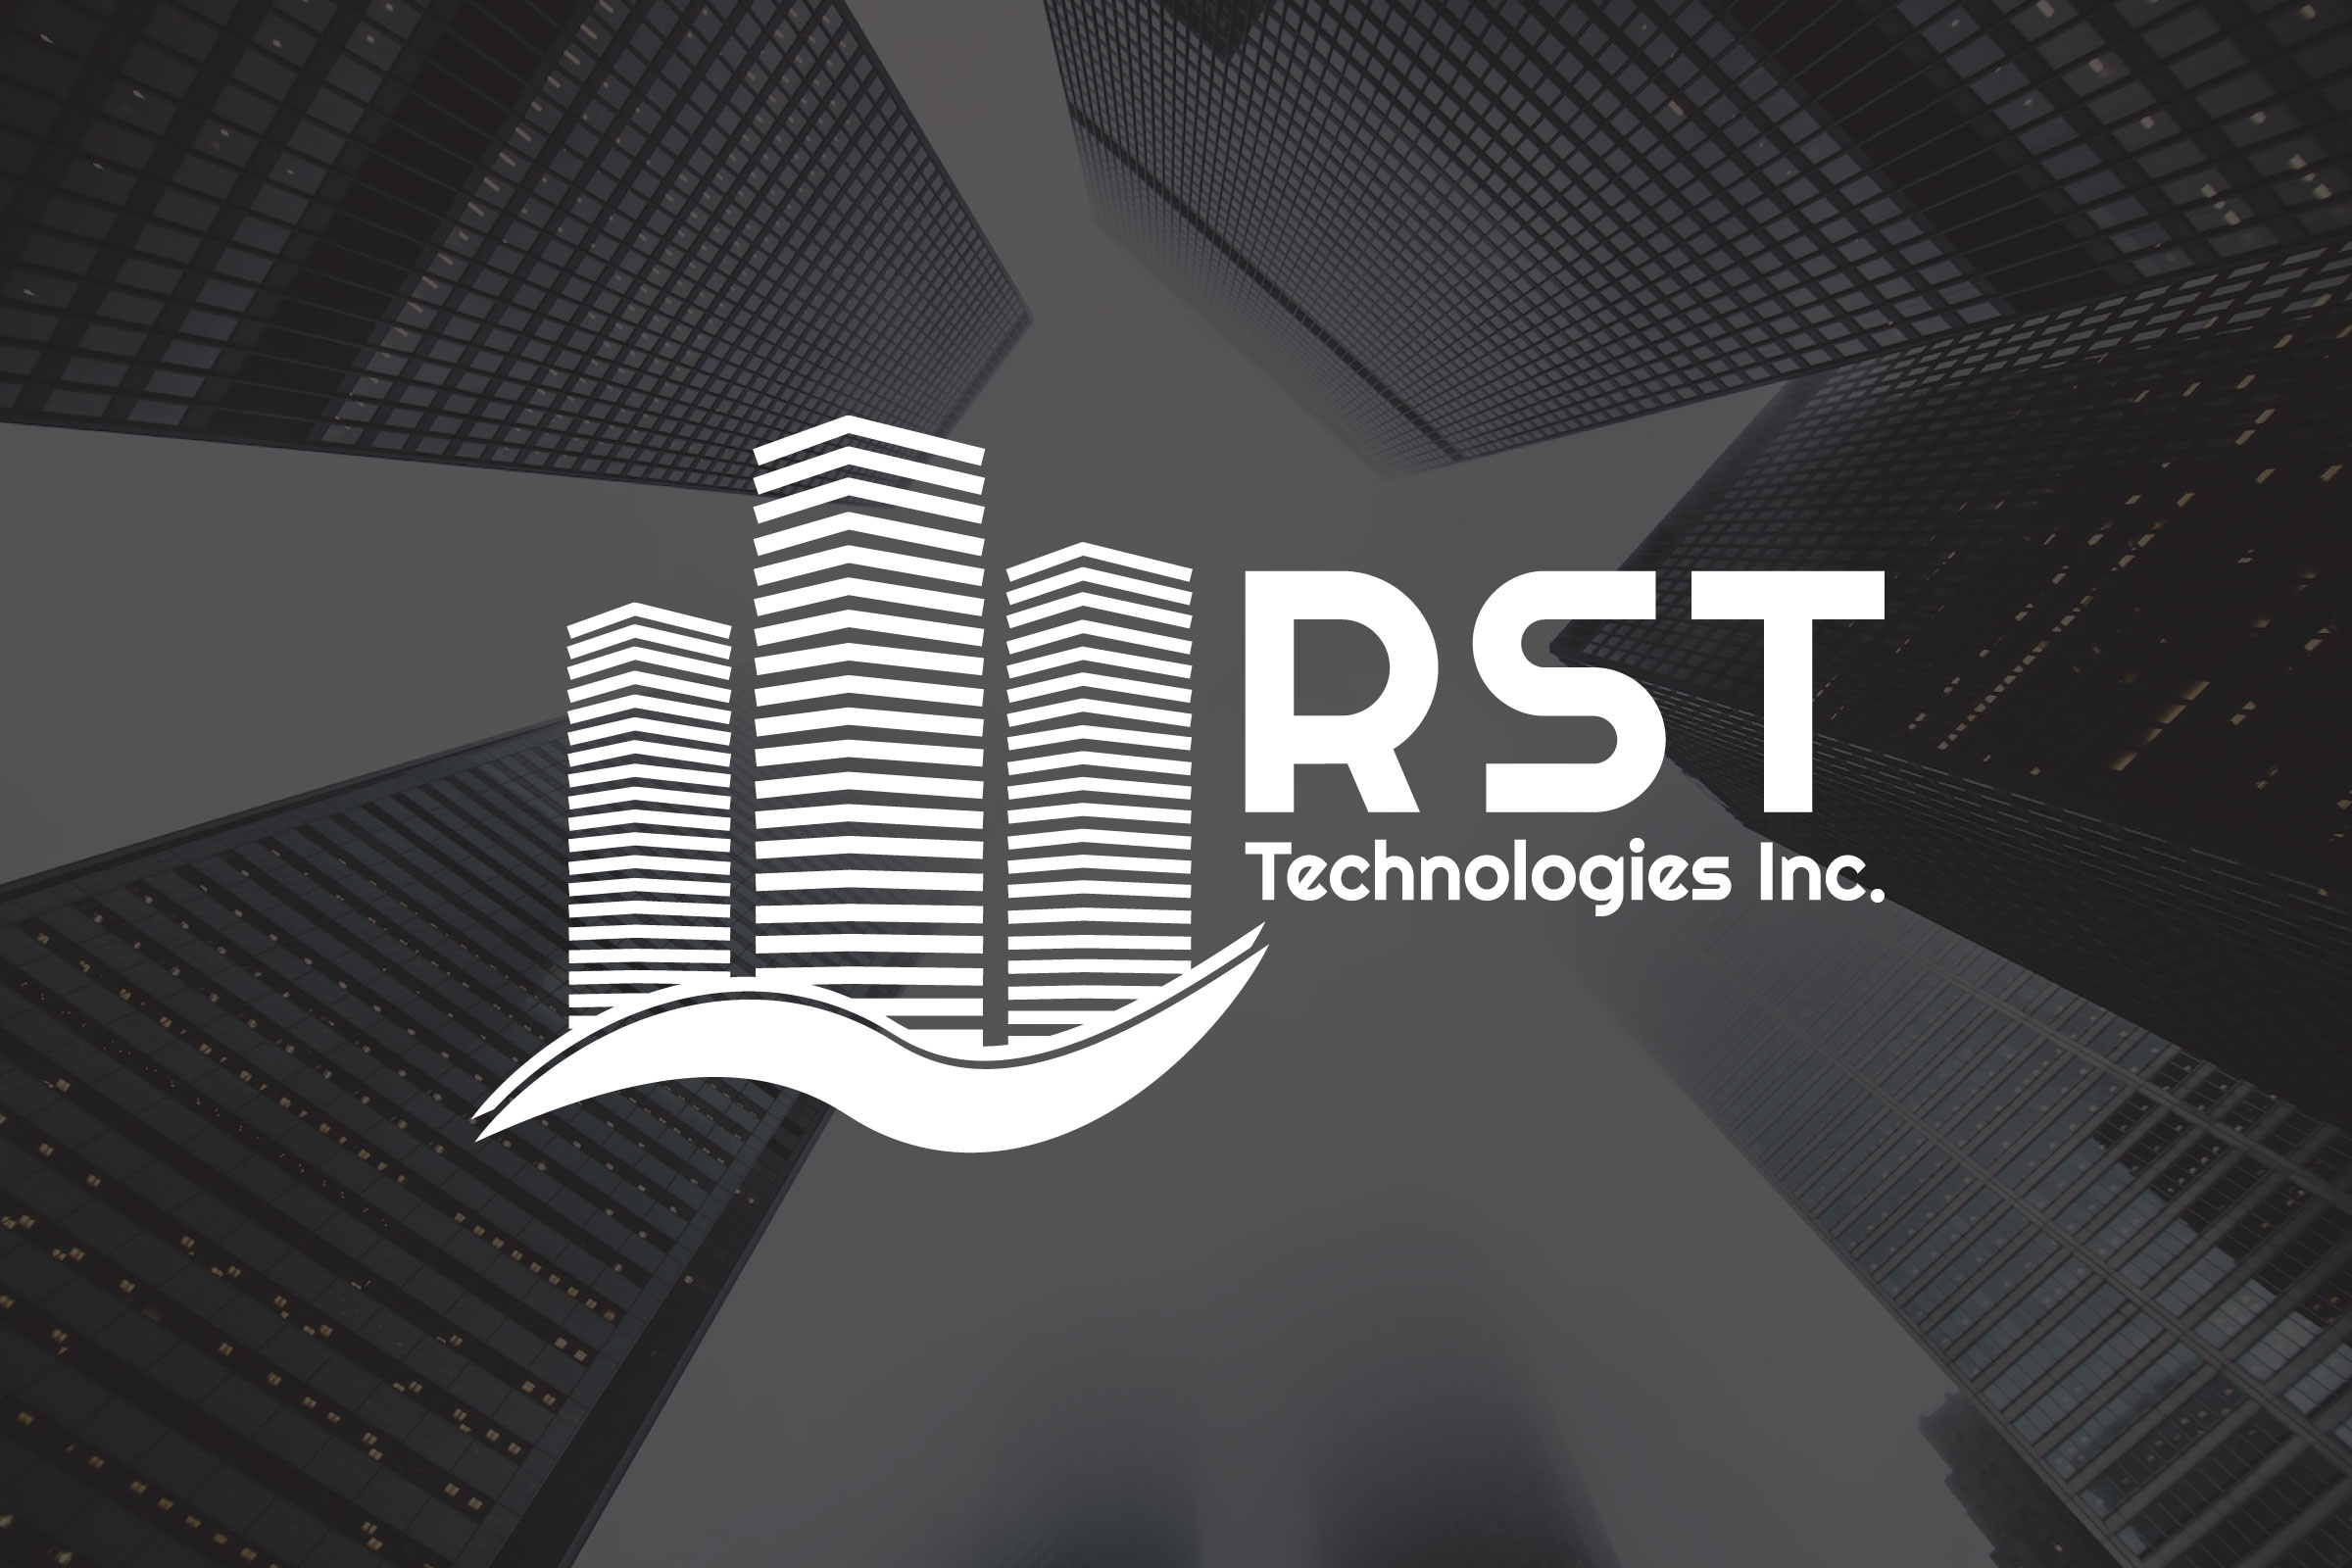 RST Technologies Inc